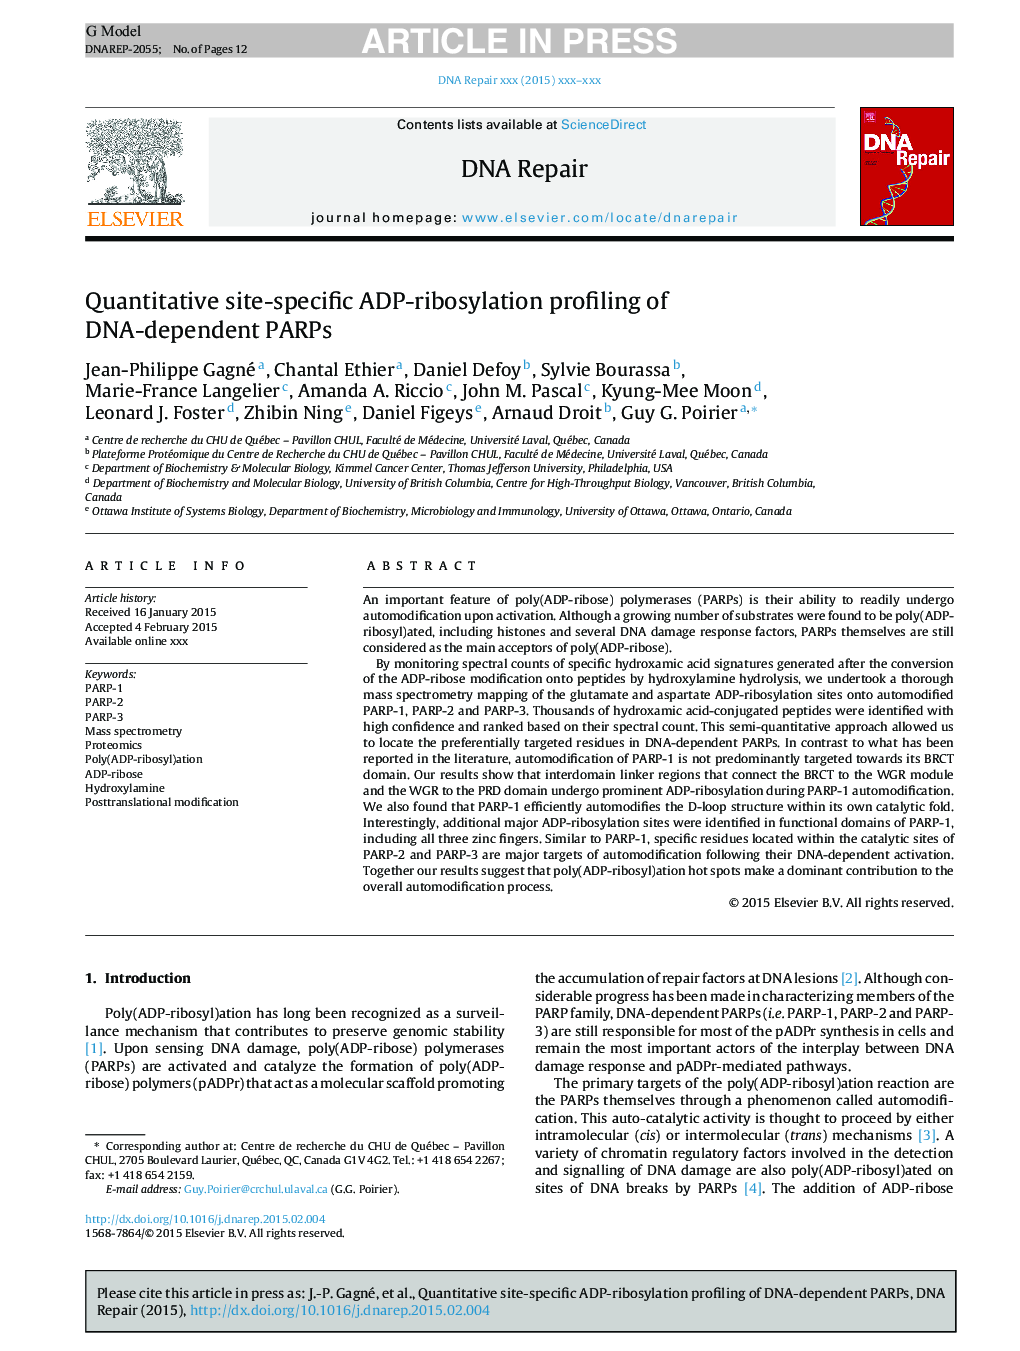 Quantitative site-specific ADP-ribosylation profiling of DNA-dependent PARPs